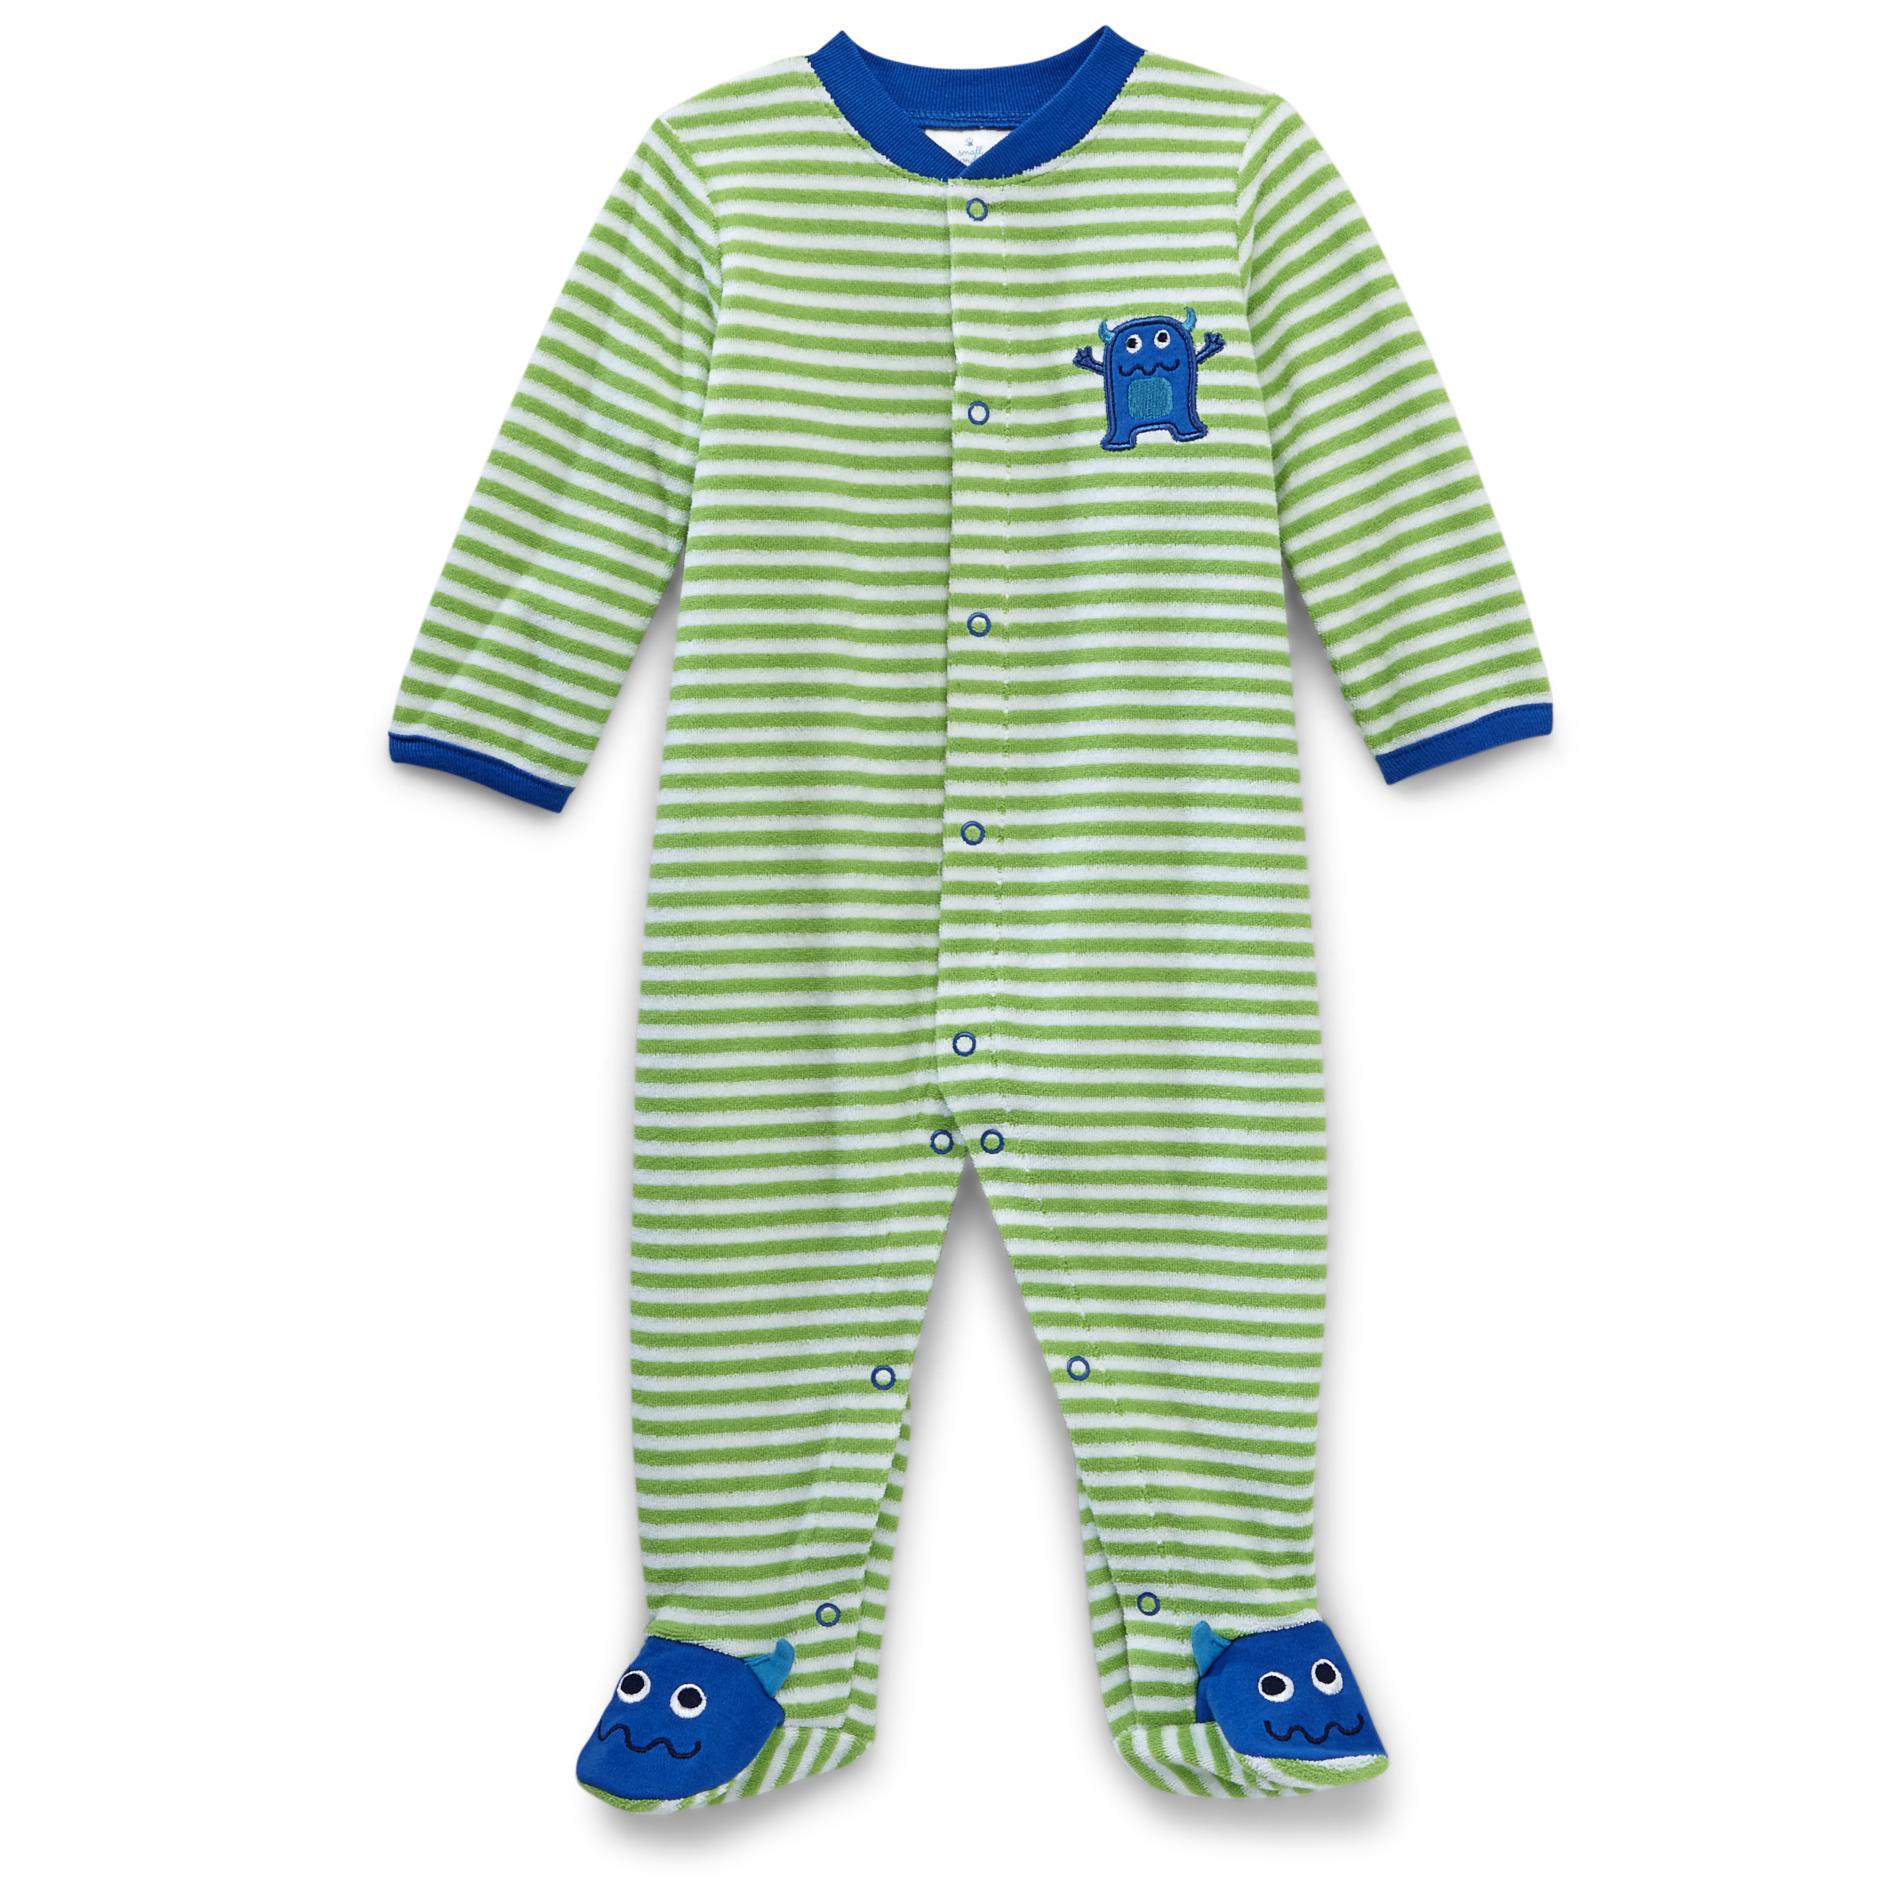 Small Wonders Newborn Boy's Footed Pajama Sleeper - Lil' Monster